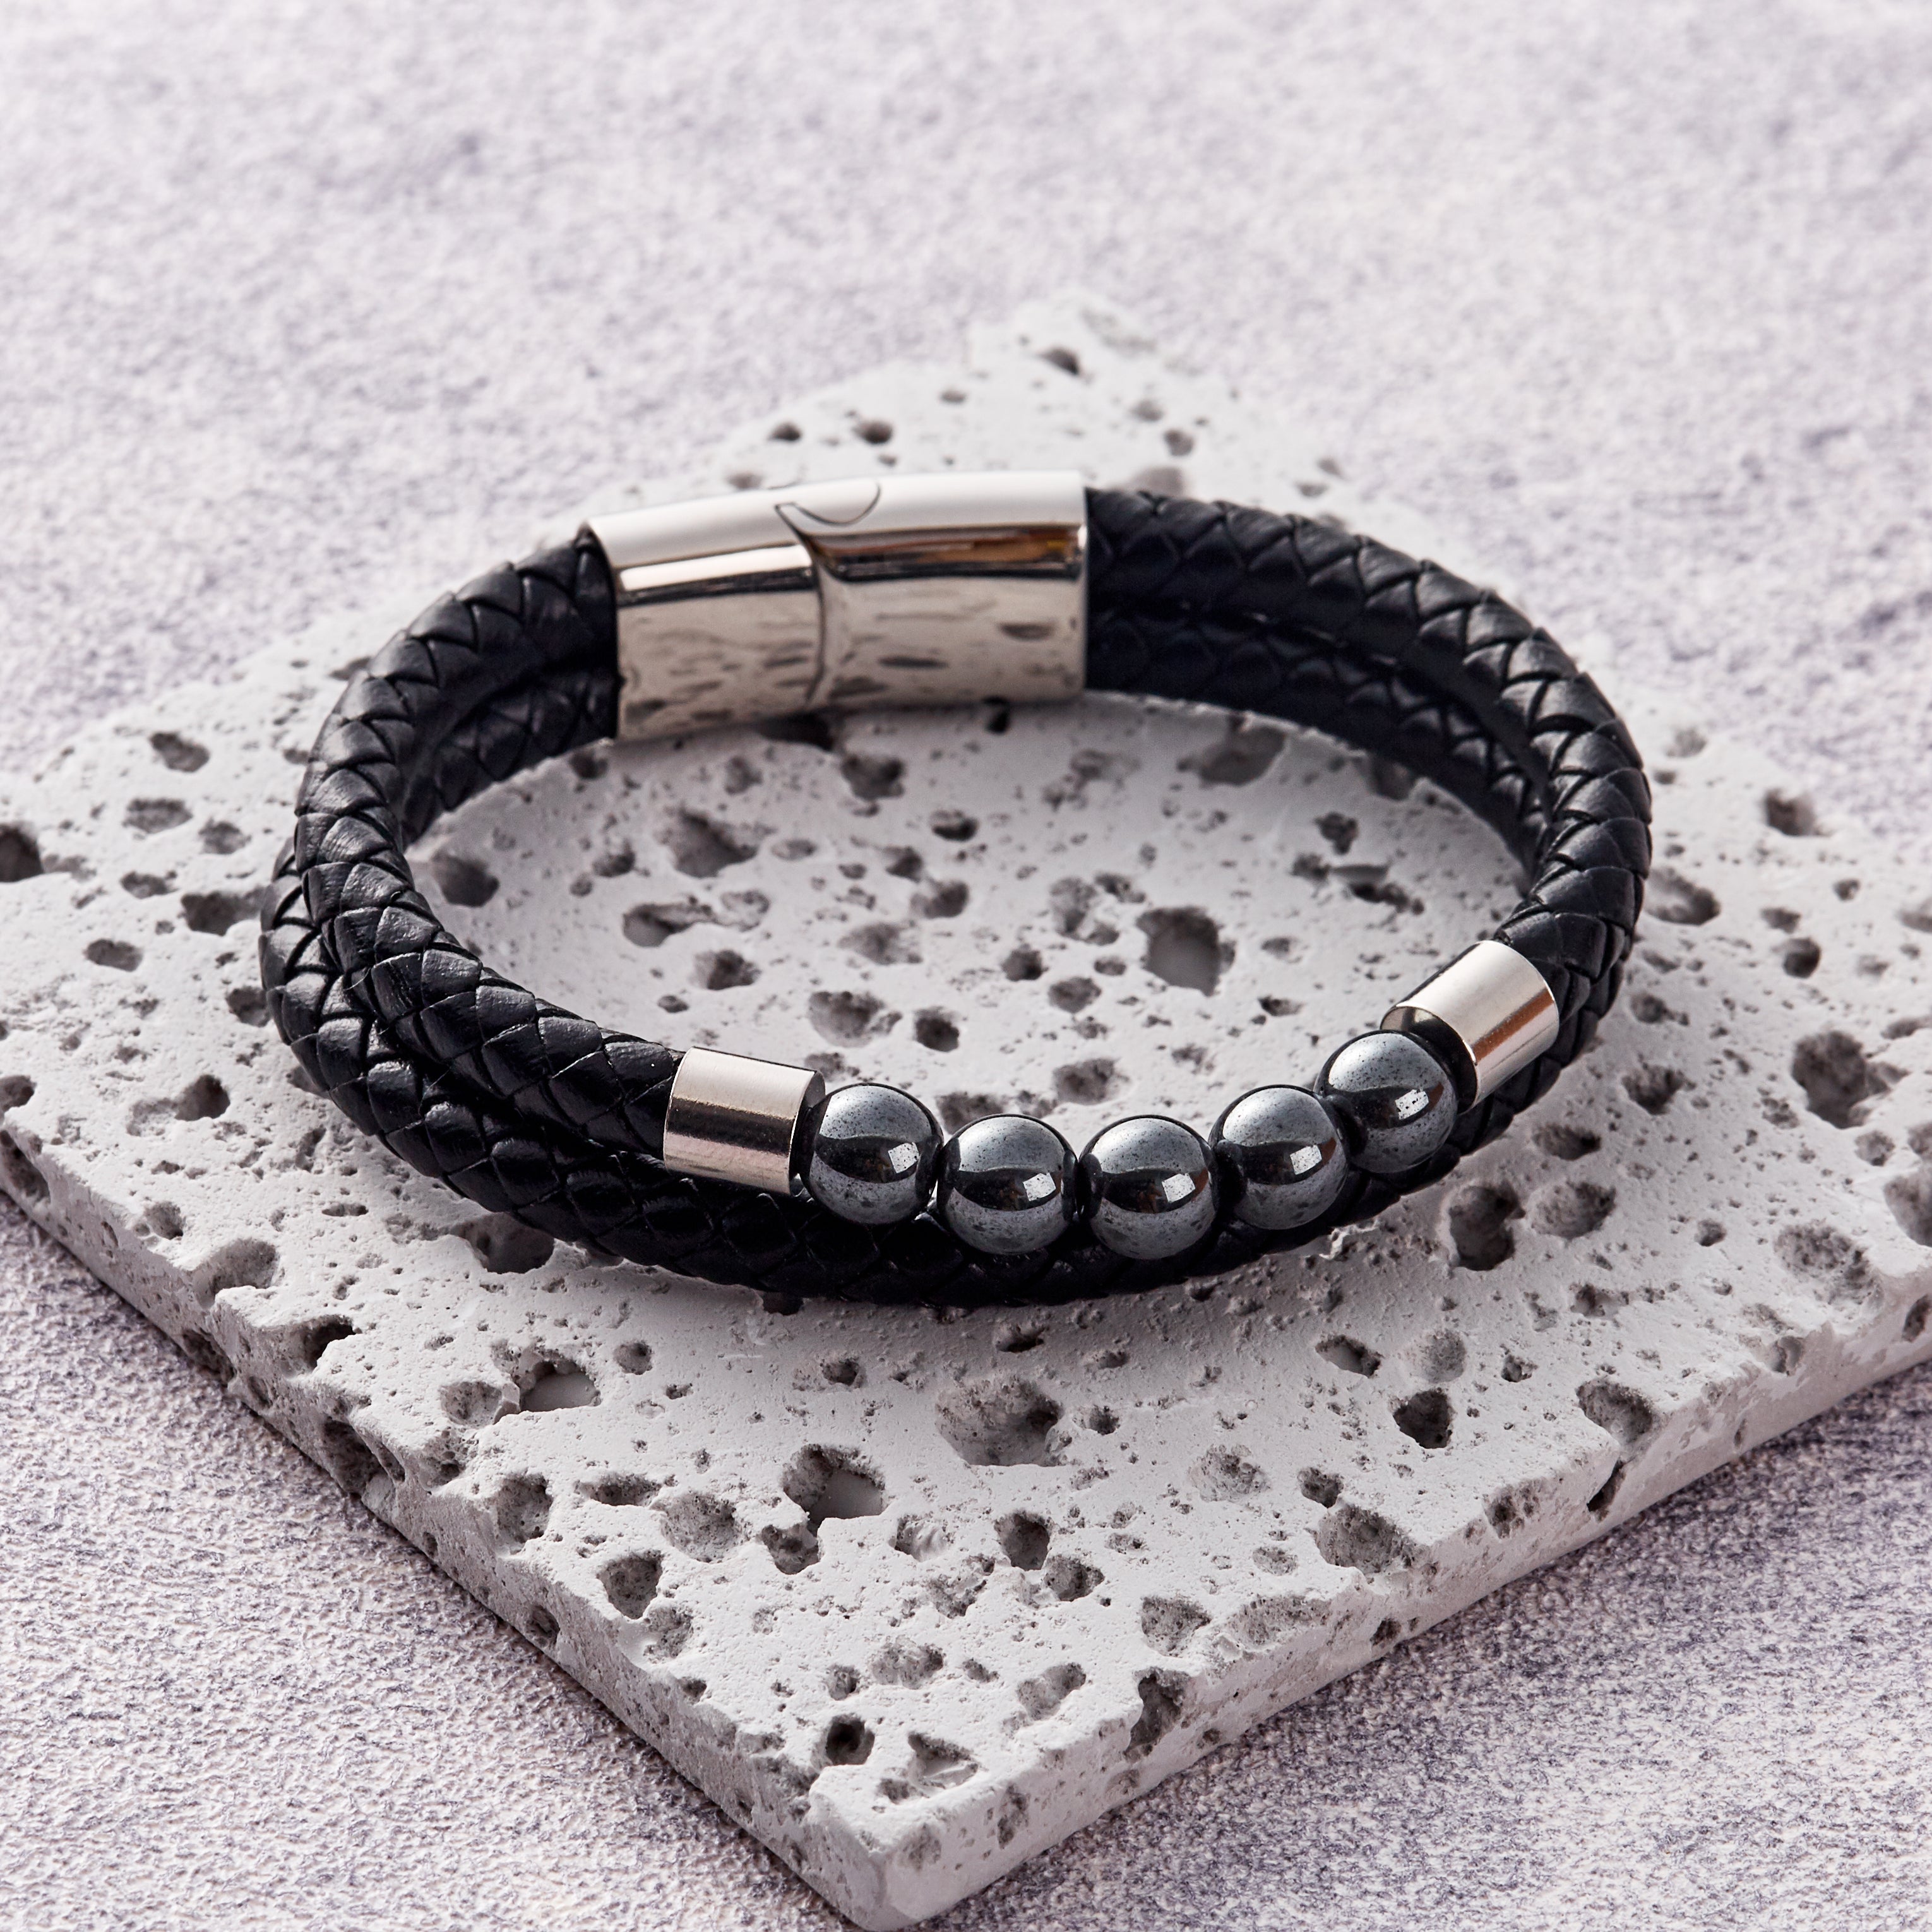 Men's Hematite Genuine Leather Bracelet